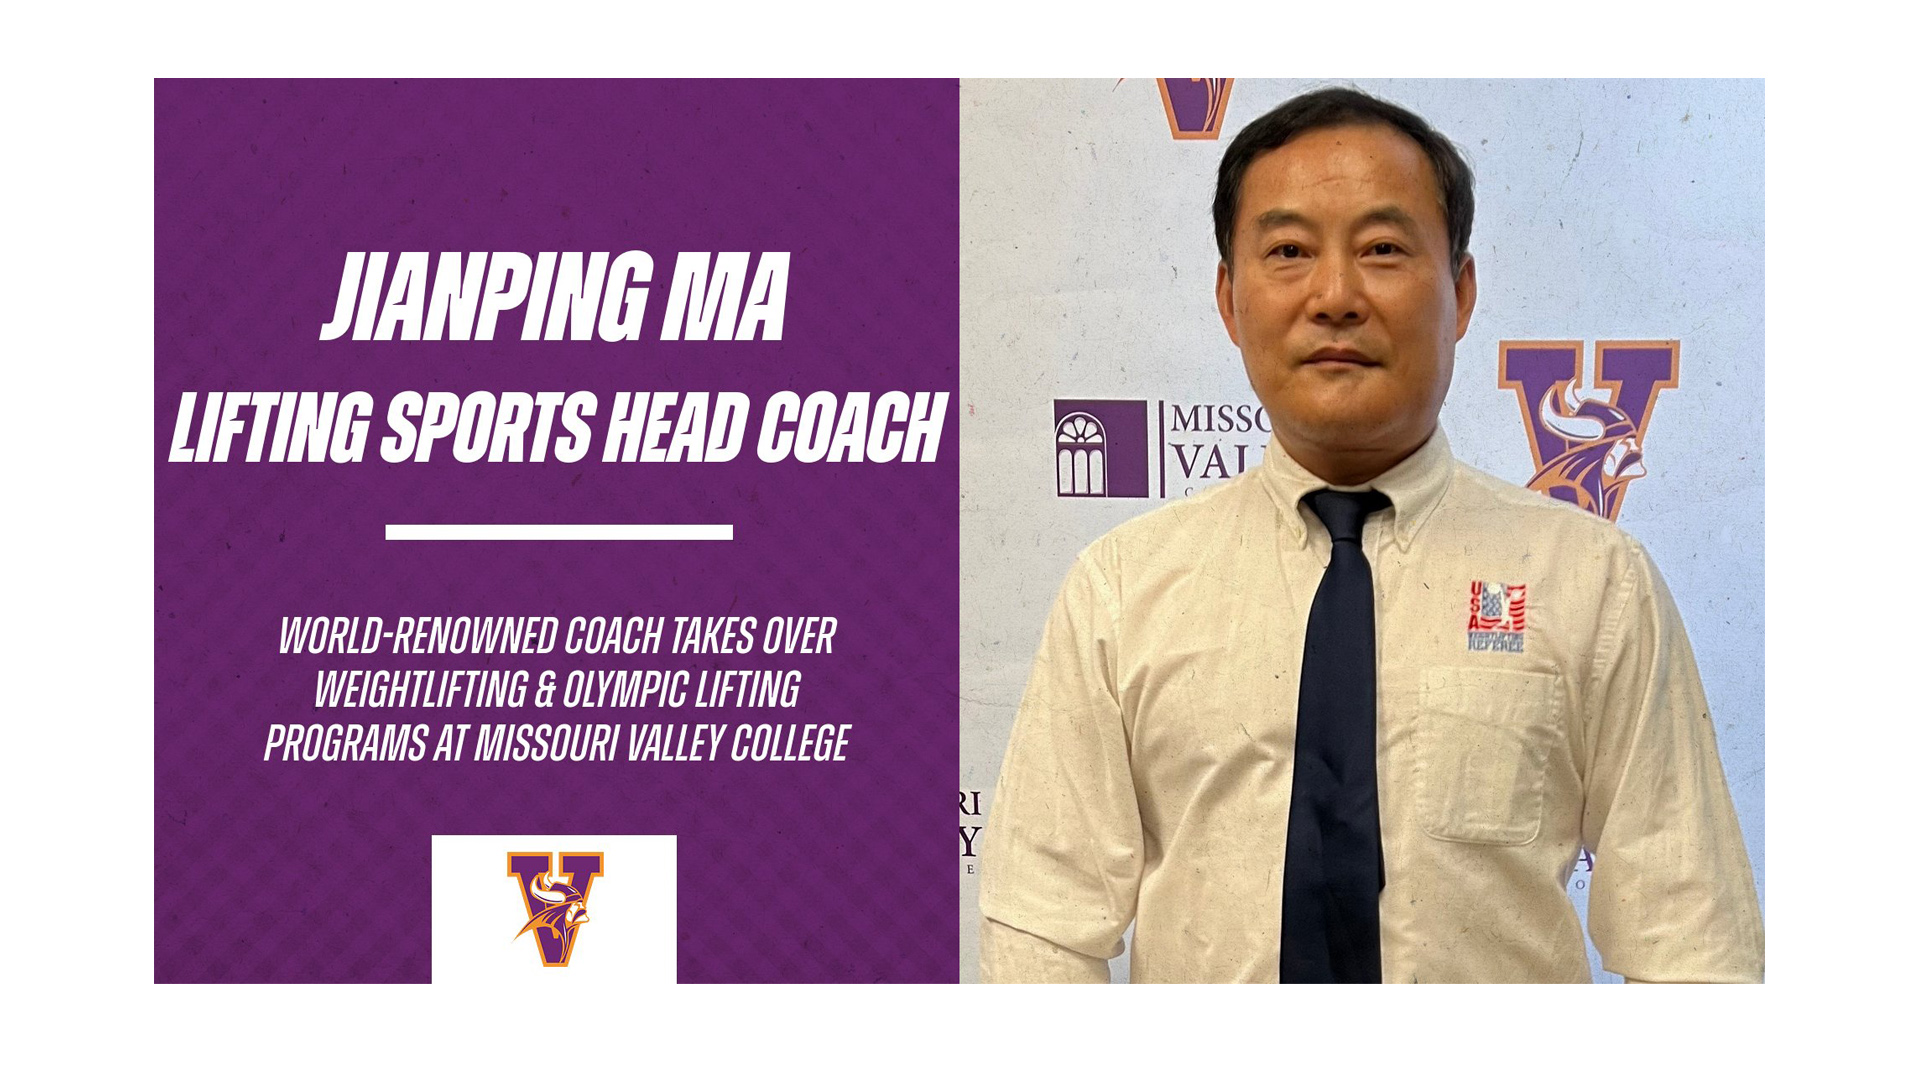 Jianping Ma New Head Coach For Lifting Sports Programs